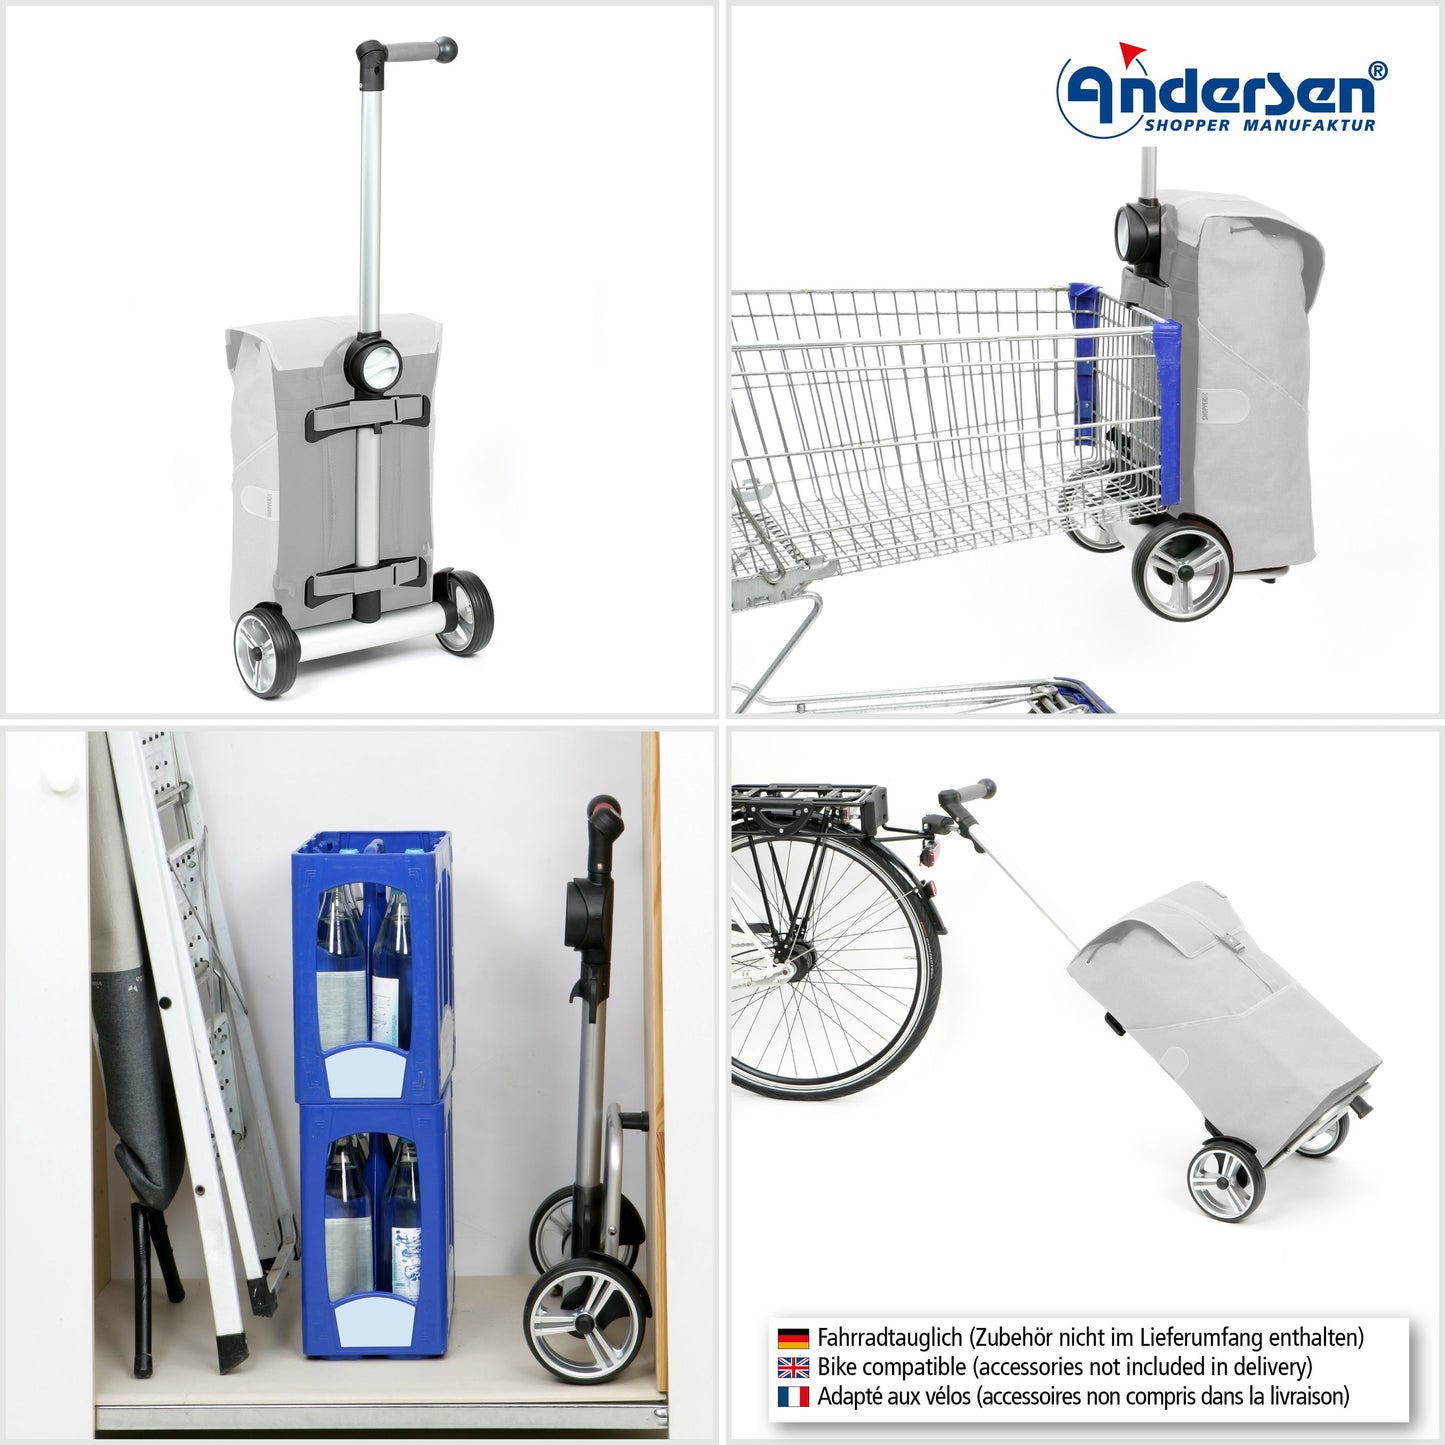 Andersen Shopper Manufaktur-Unus Shopper Carl schwarz-www.shopping-trolley.ch-bild5